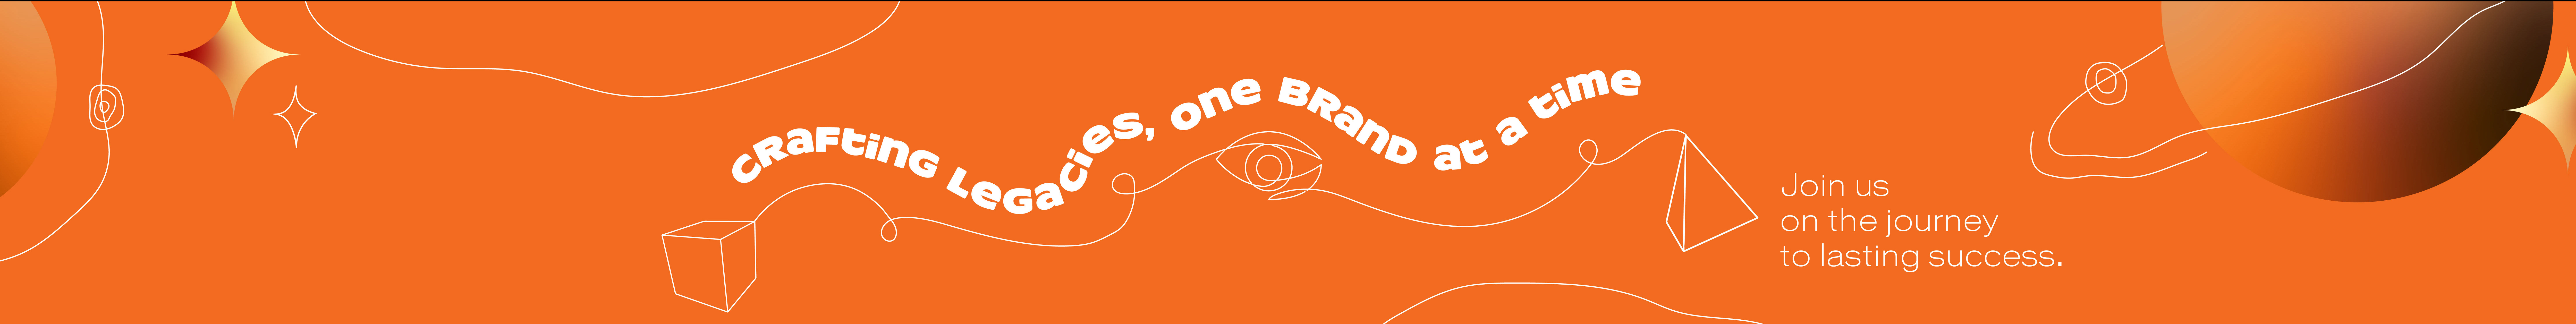 Sandhya Branding Agency's profile banner